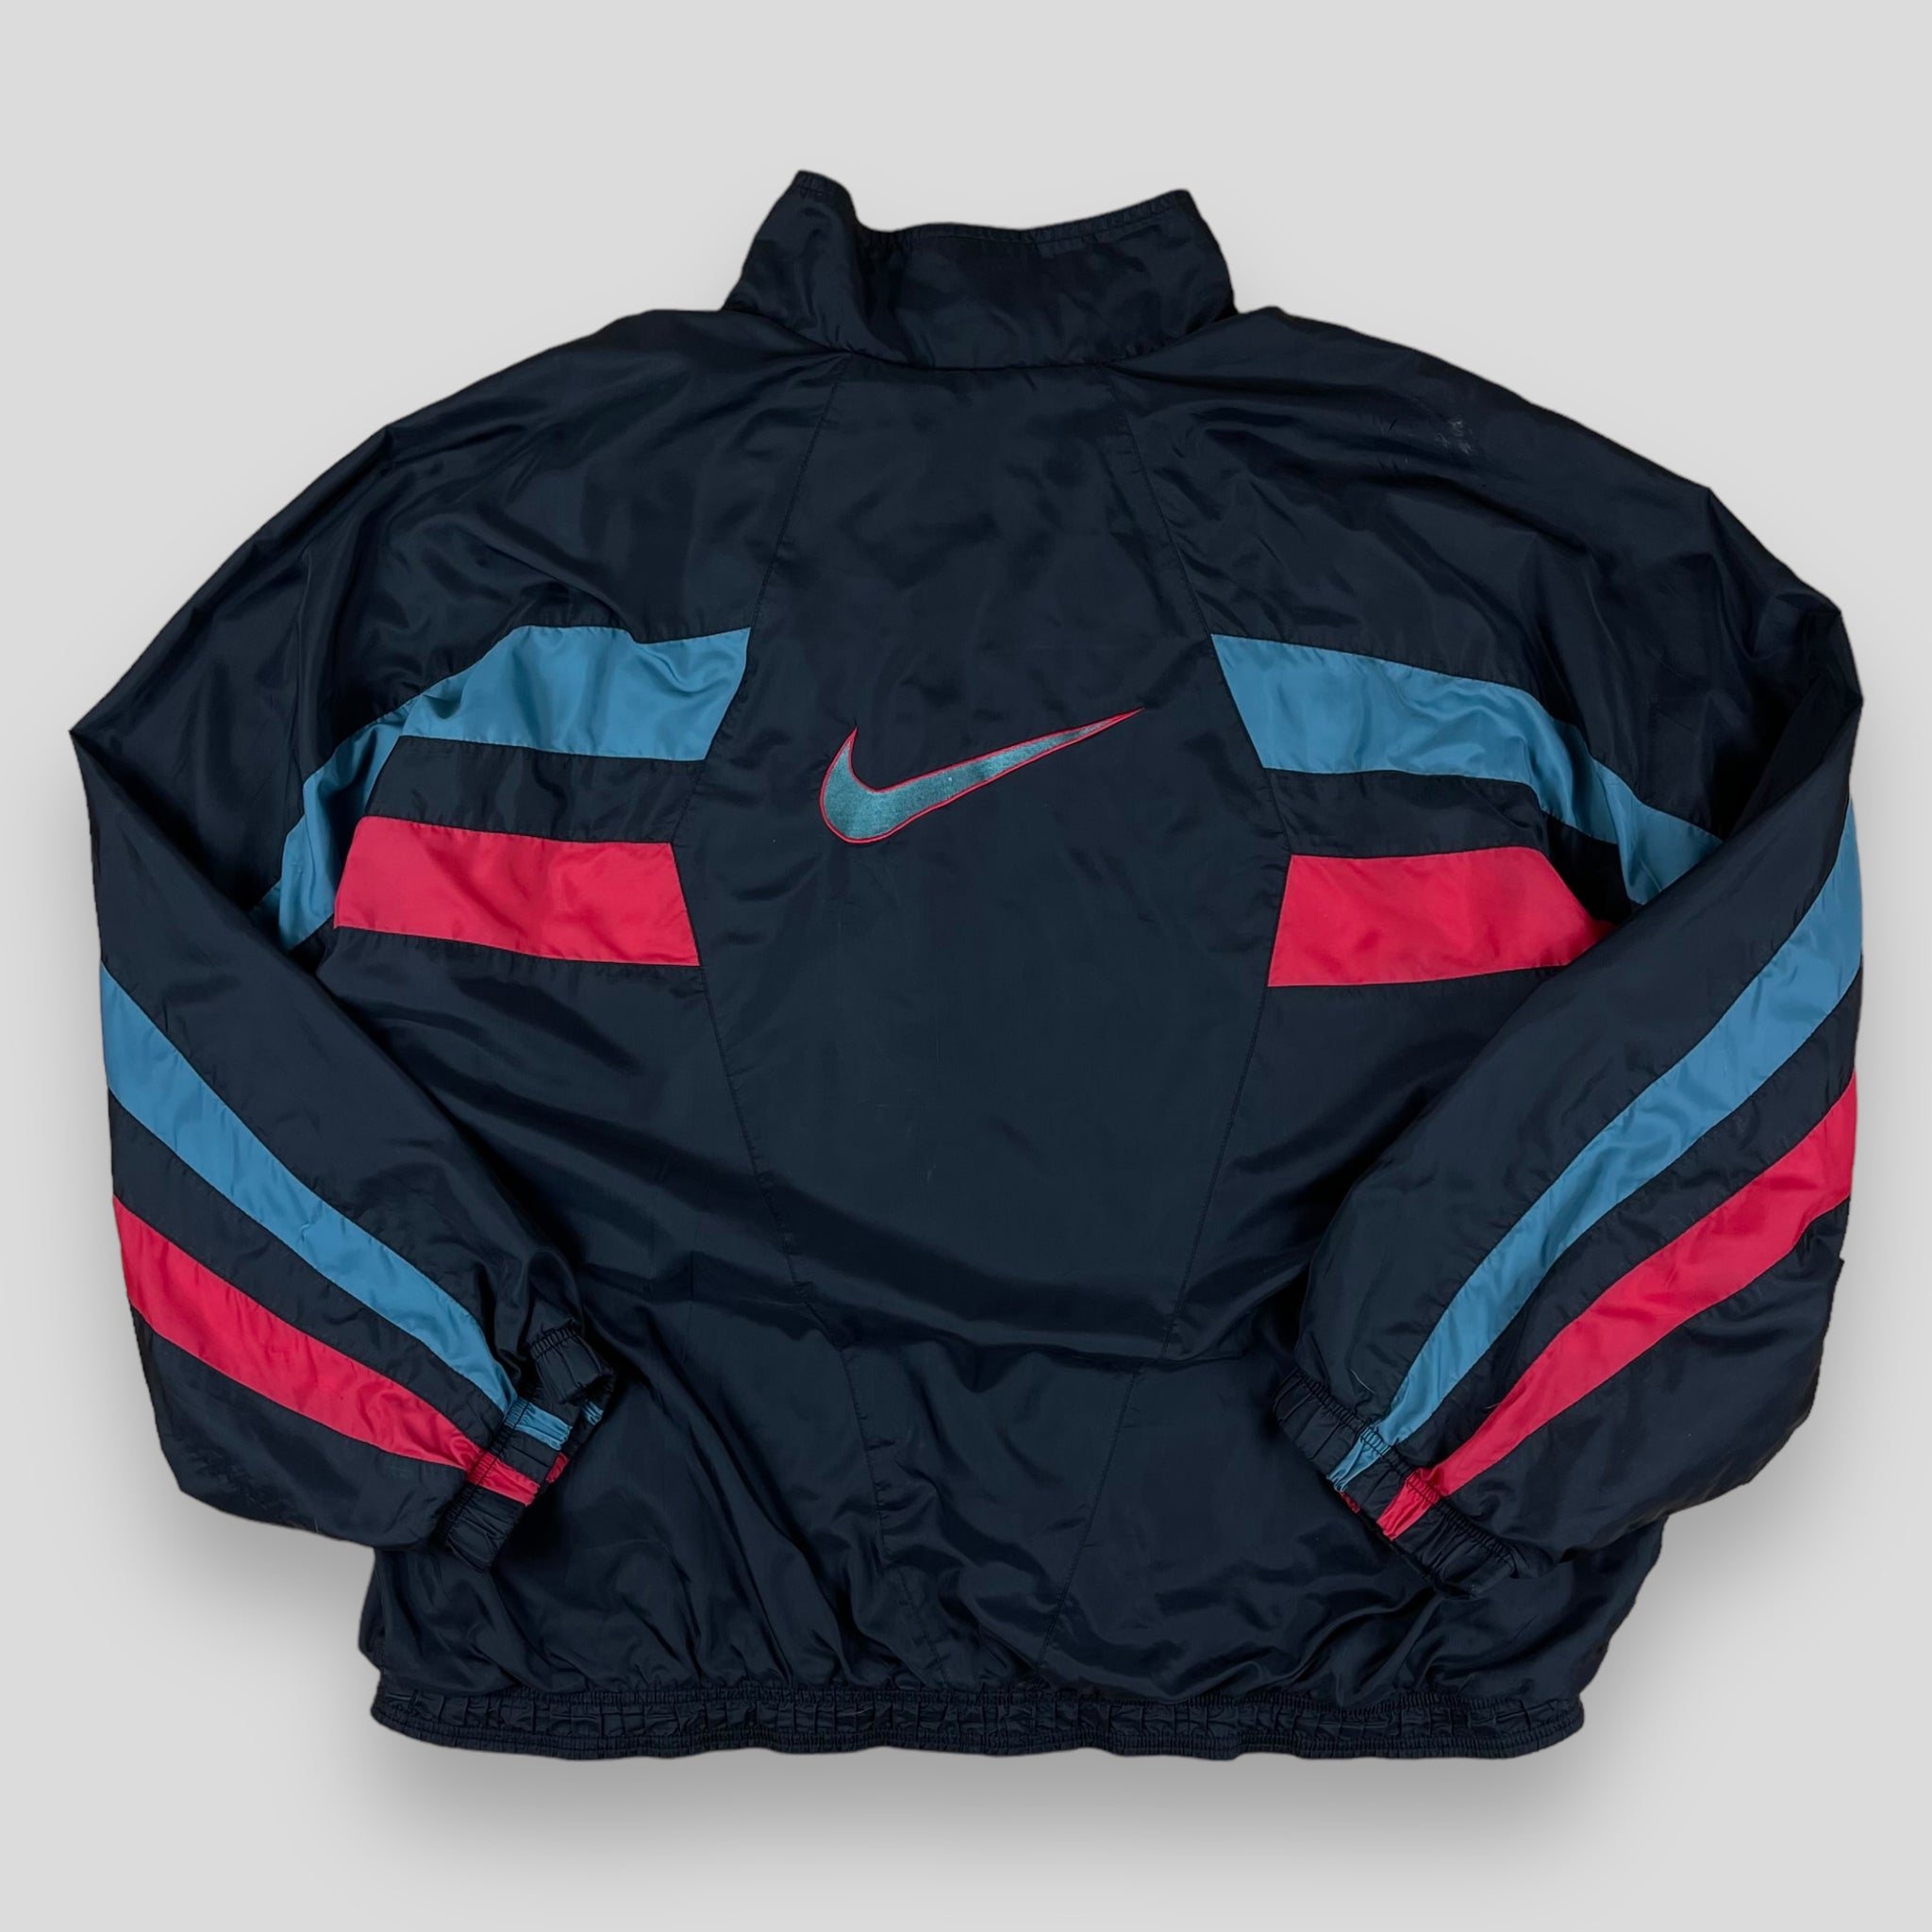 Nike Shell Jacket